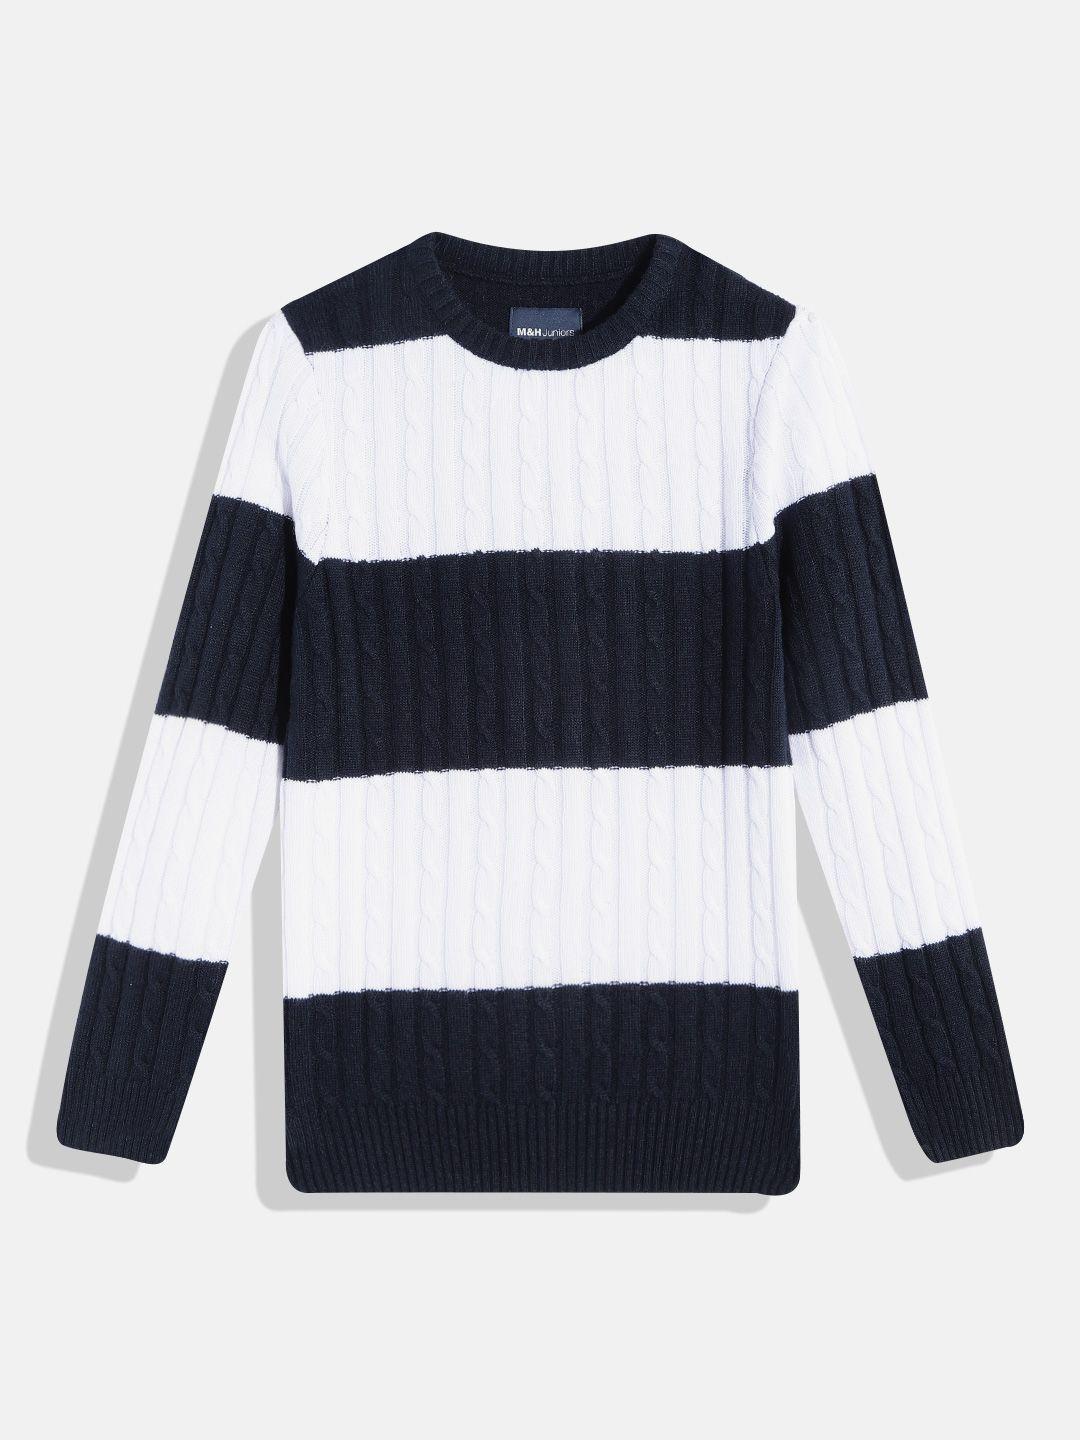 m&h juniors boys navy blue & white striped self design acrylic pullover